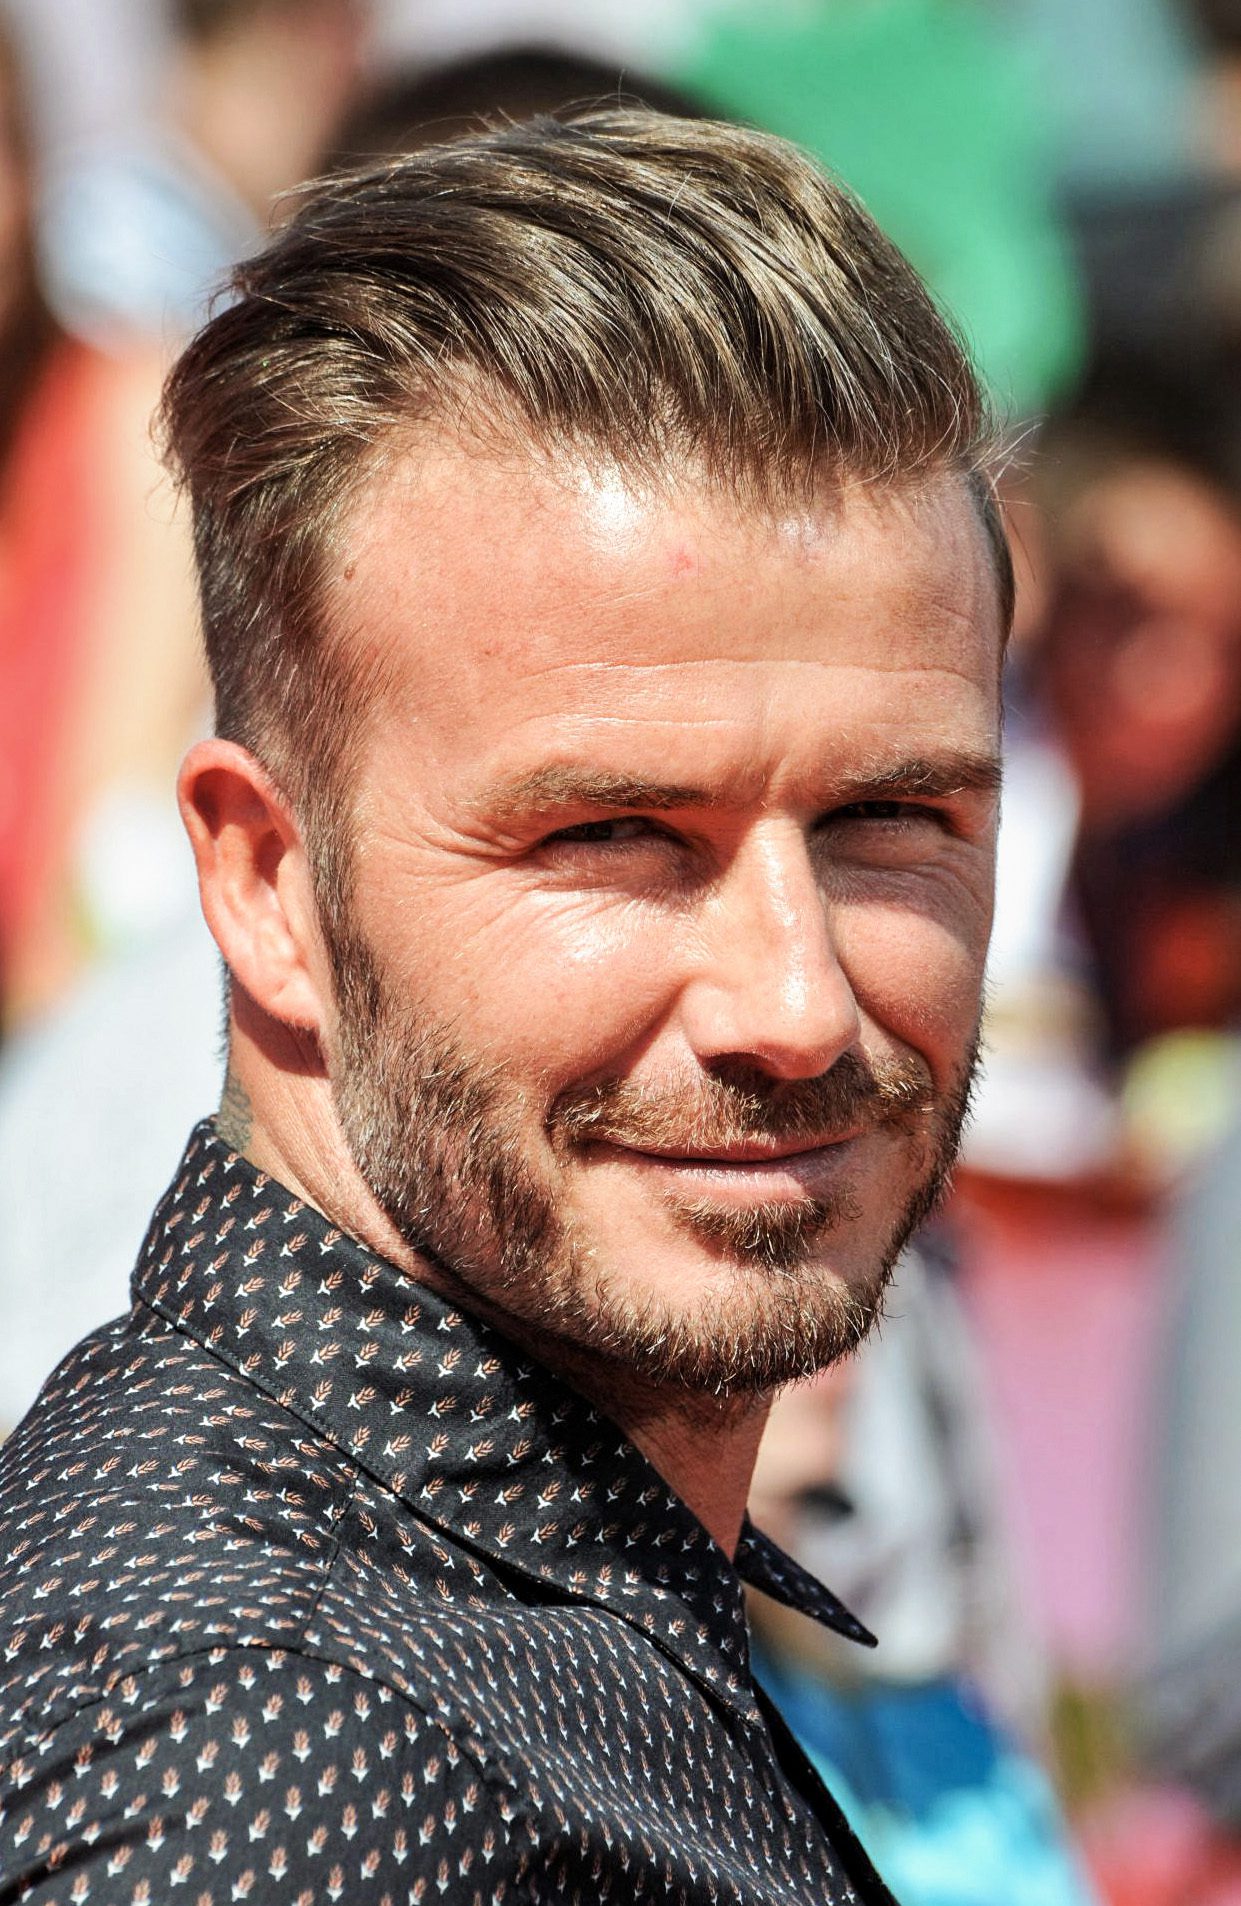 David Beckham’s slicked back undercut + facial hair combo